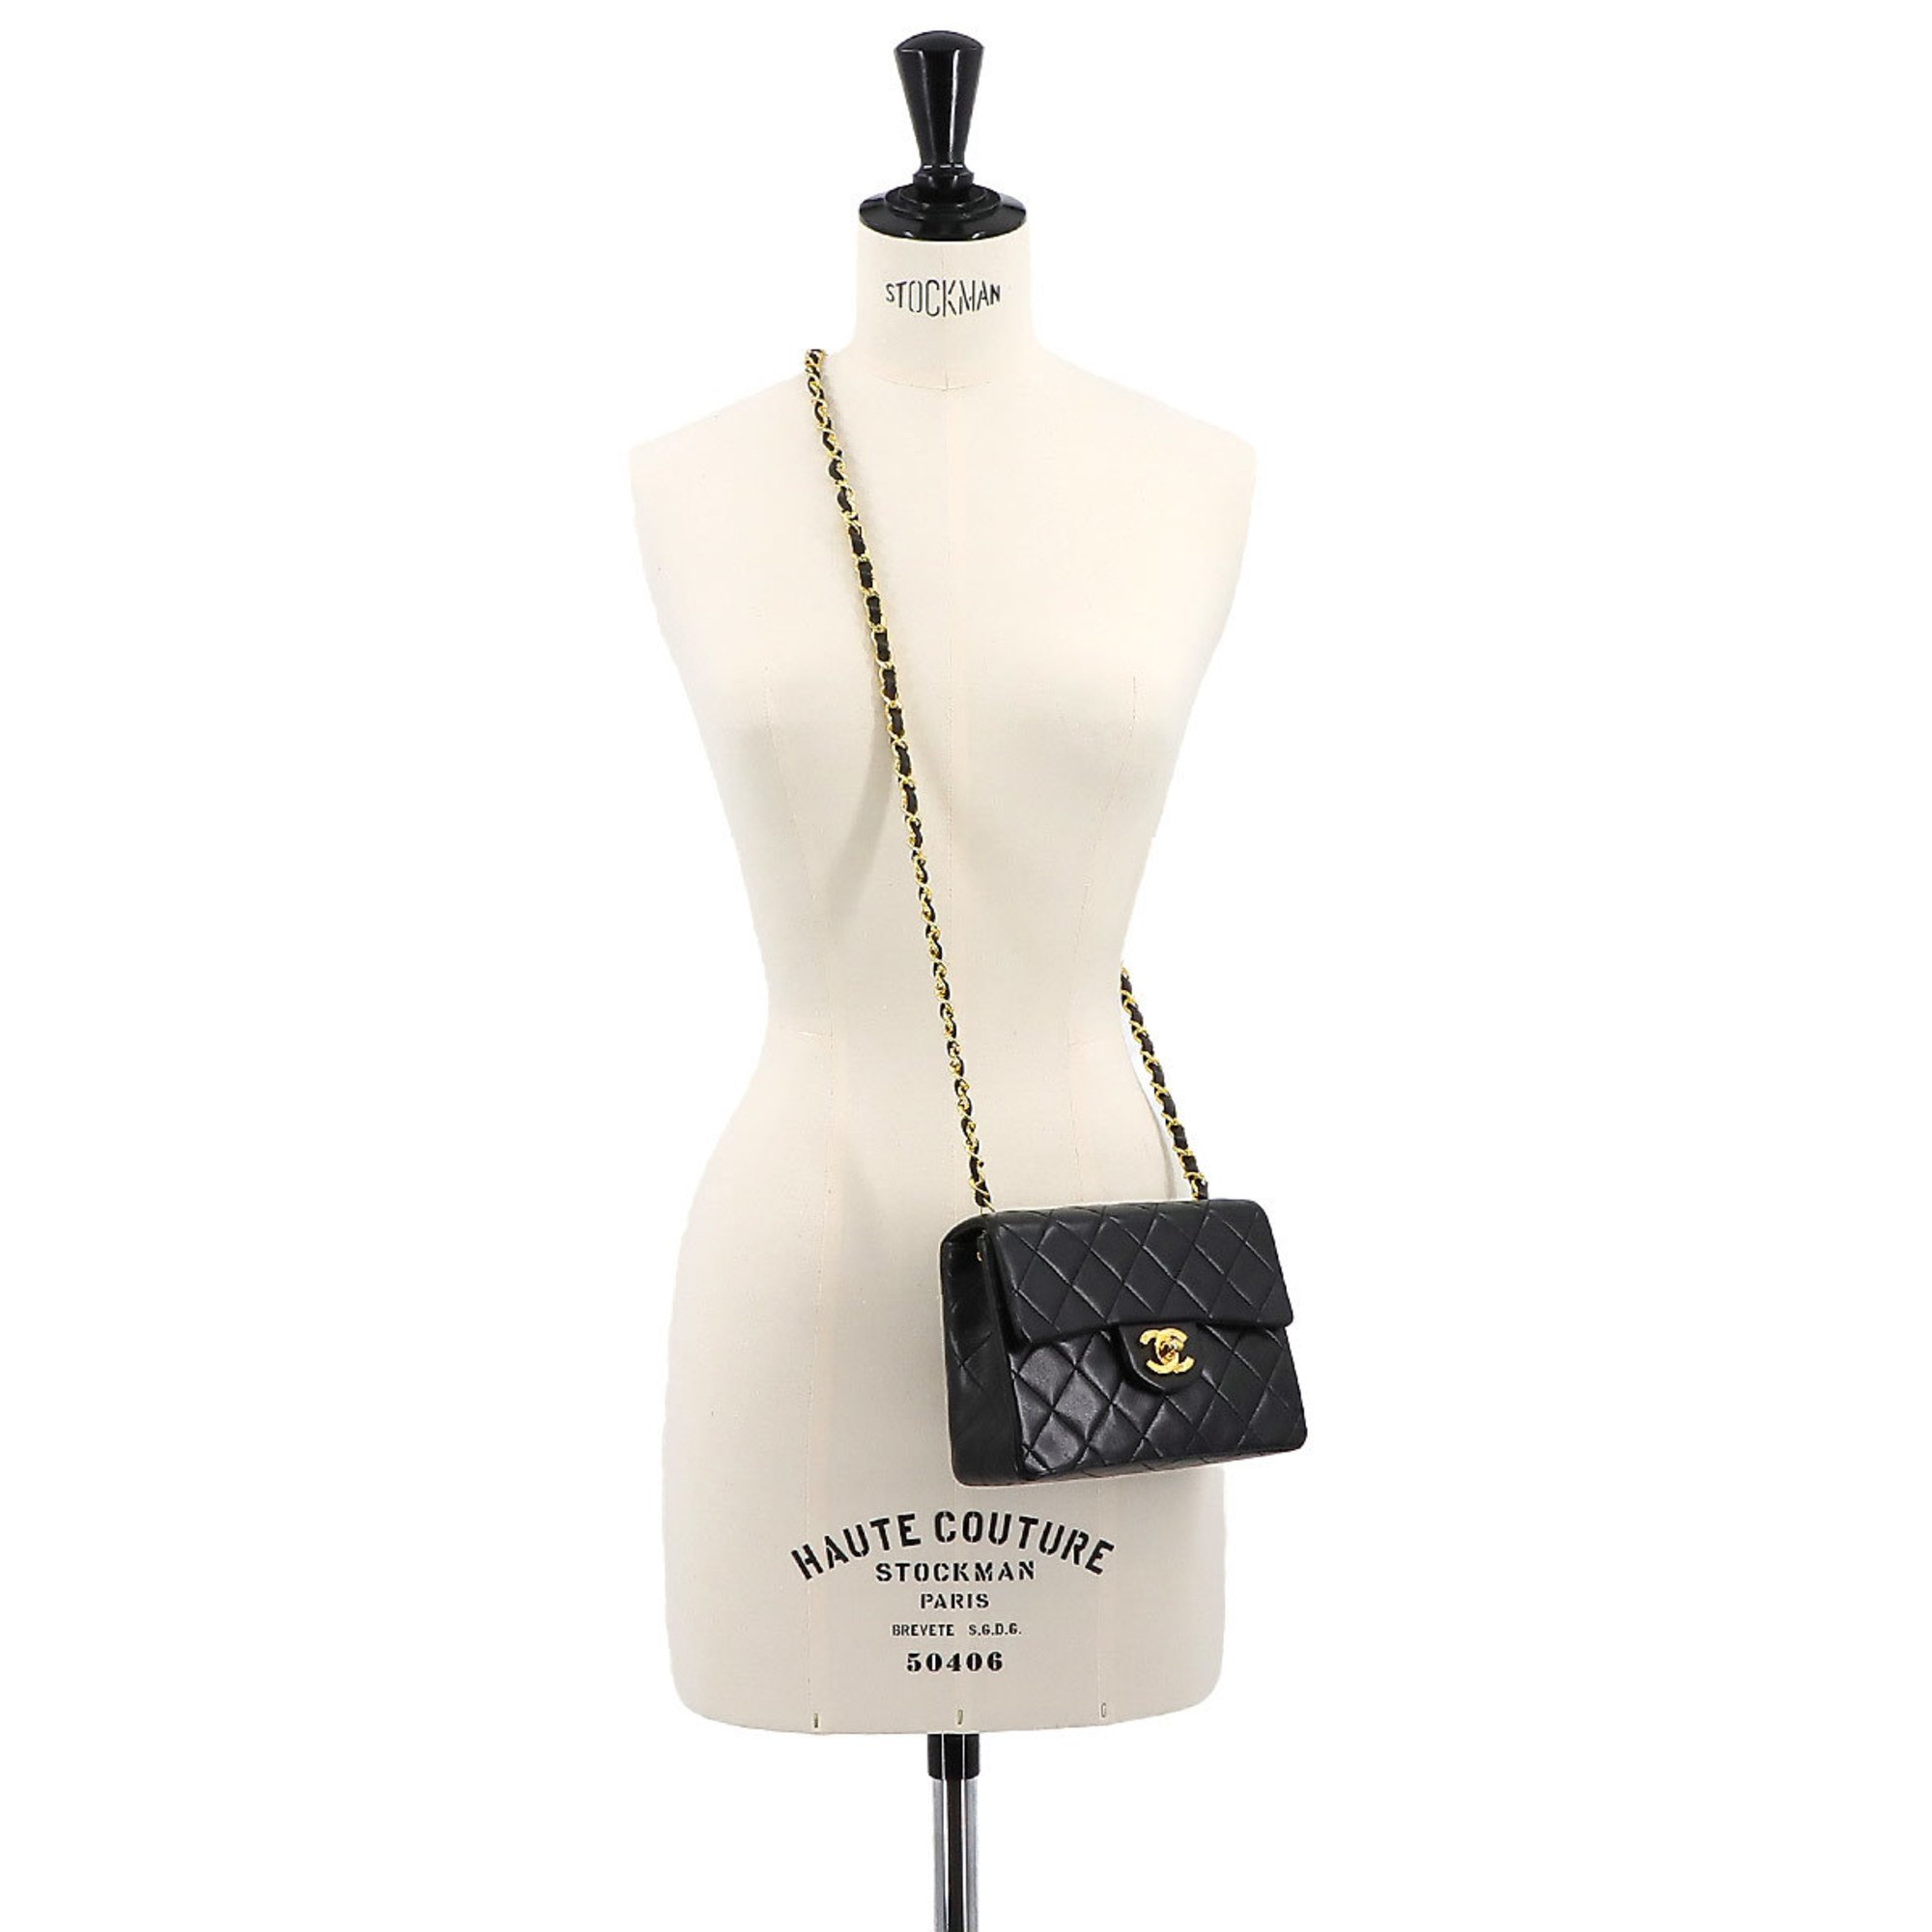 CHANEL Matelasse Chain Shoulder Bag Leather Black A01115 Gold Metal Fittings Mini